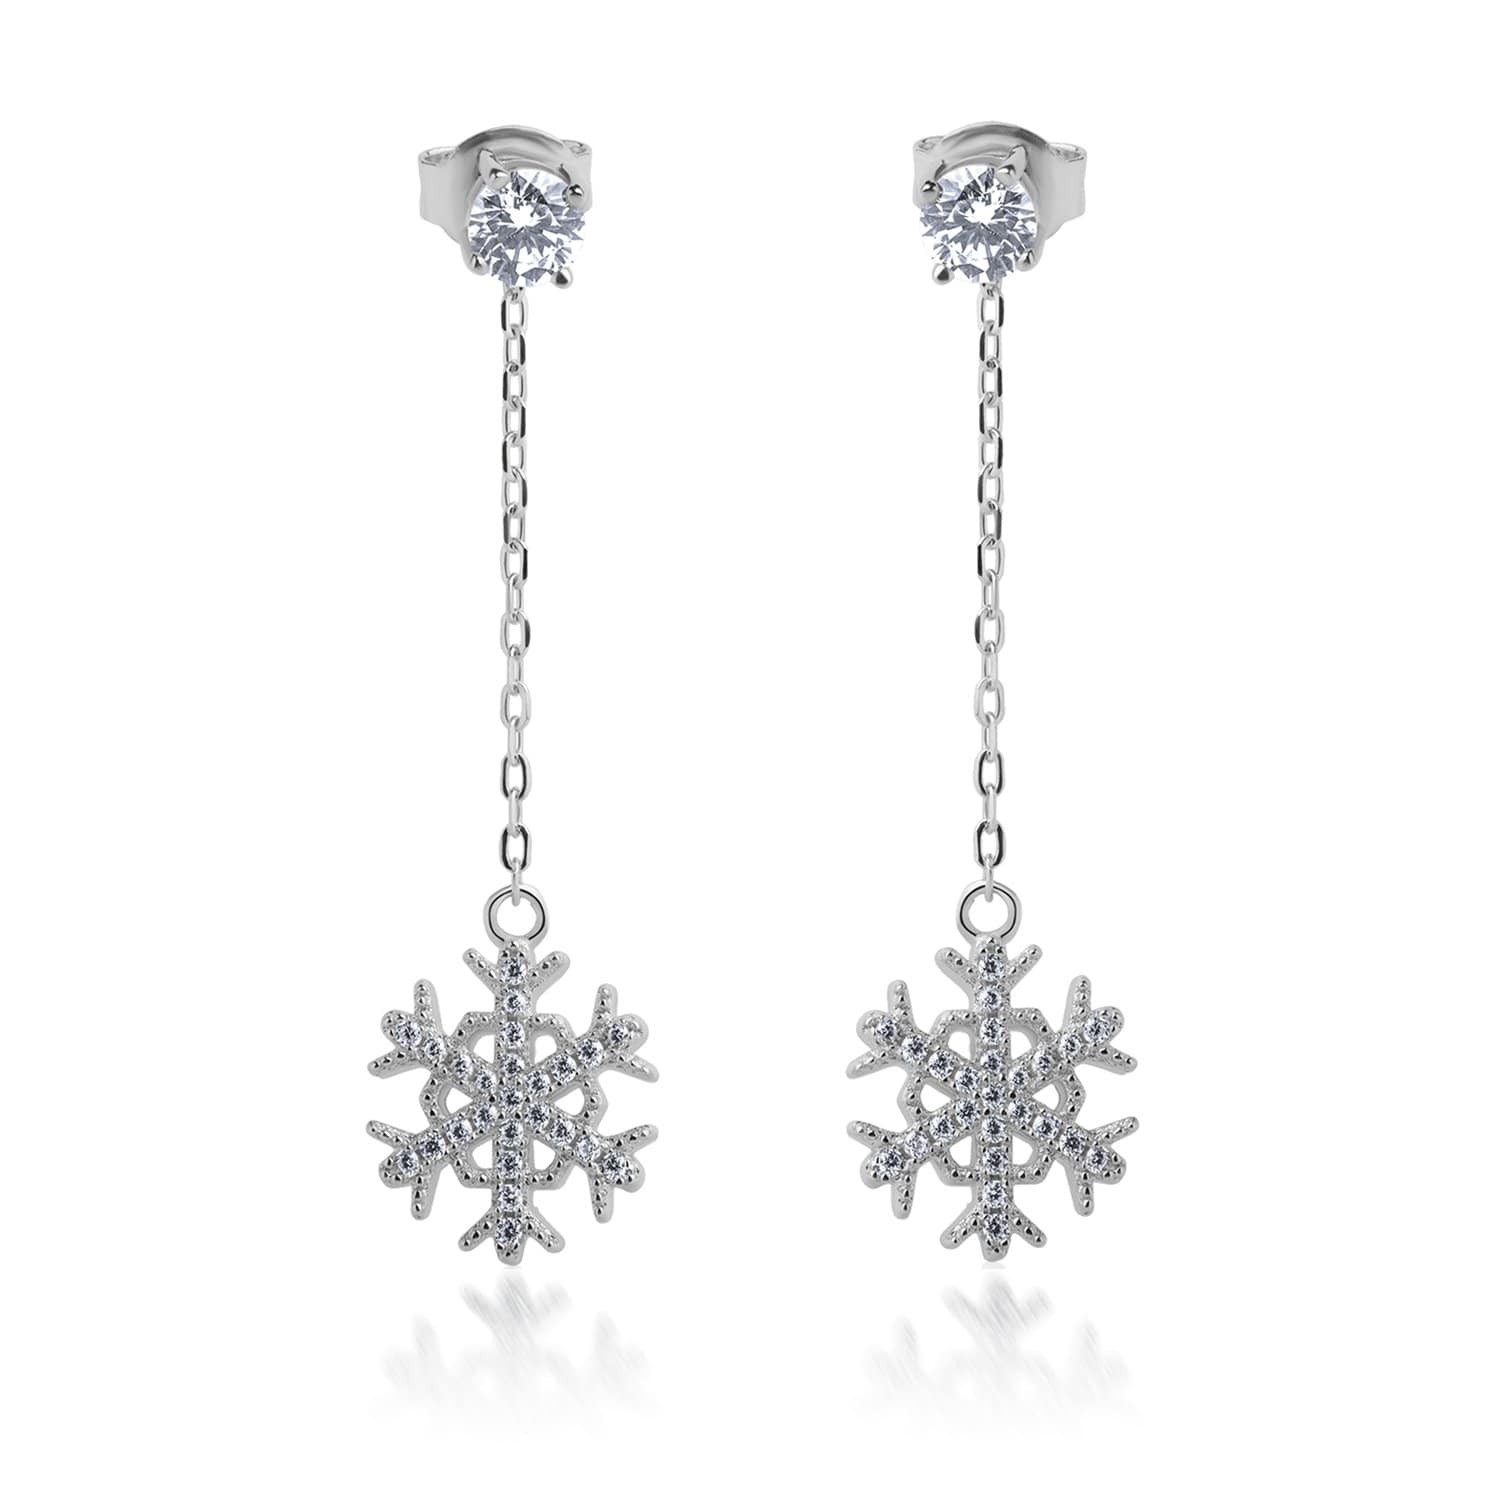 Lynora Jewellery Earring Sterling Silver Snowflake Earrings Sterling Silver